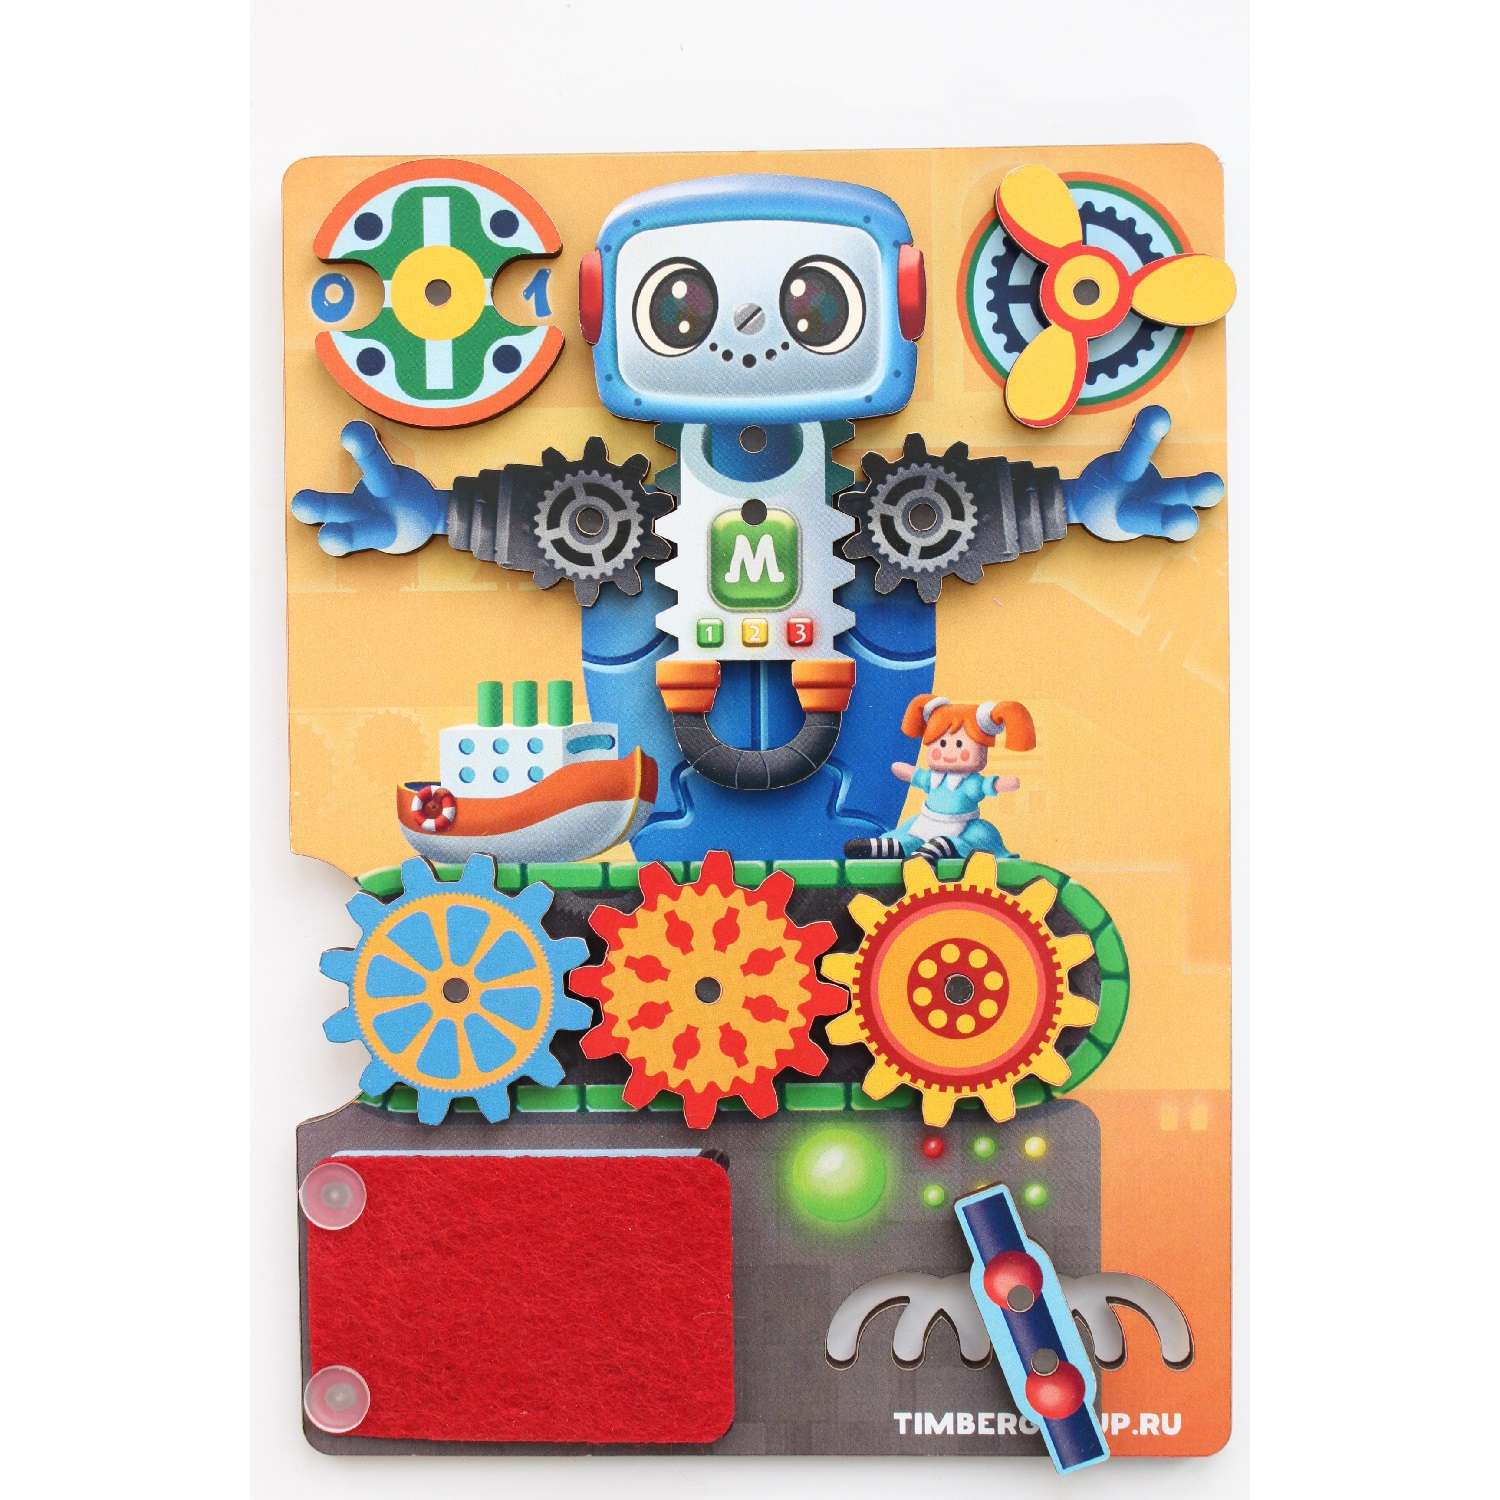 Бизиборд Мастер игрушек Робот-мастер - фото 1